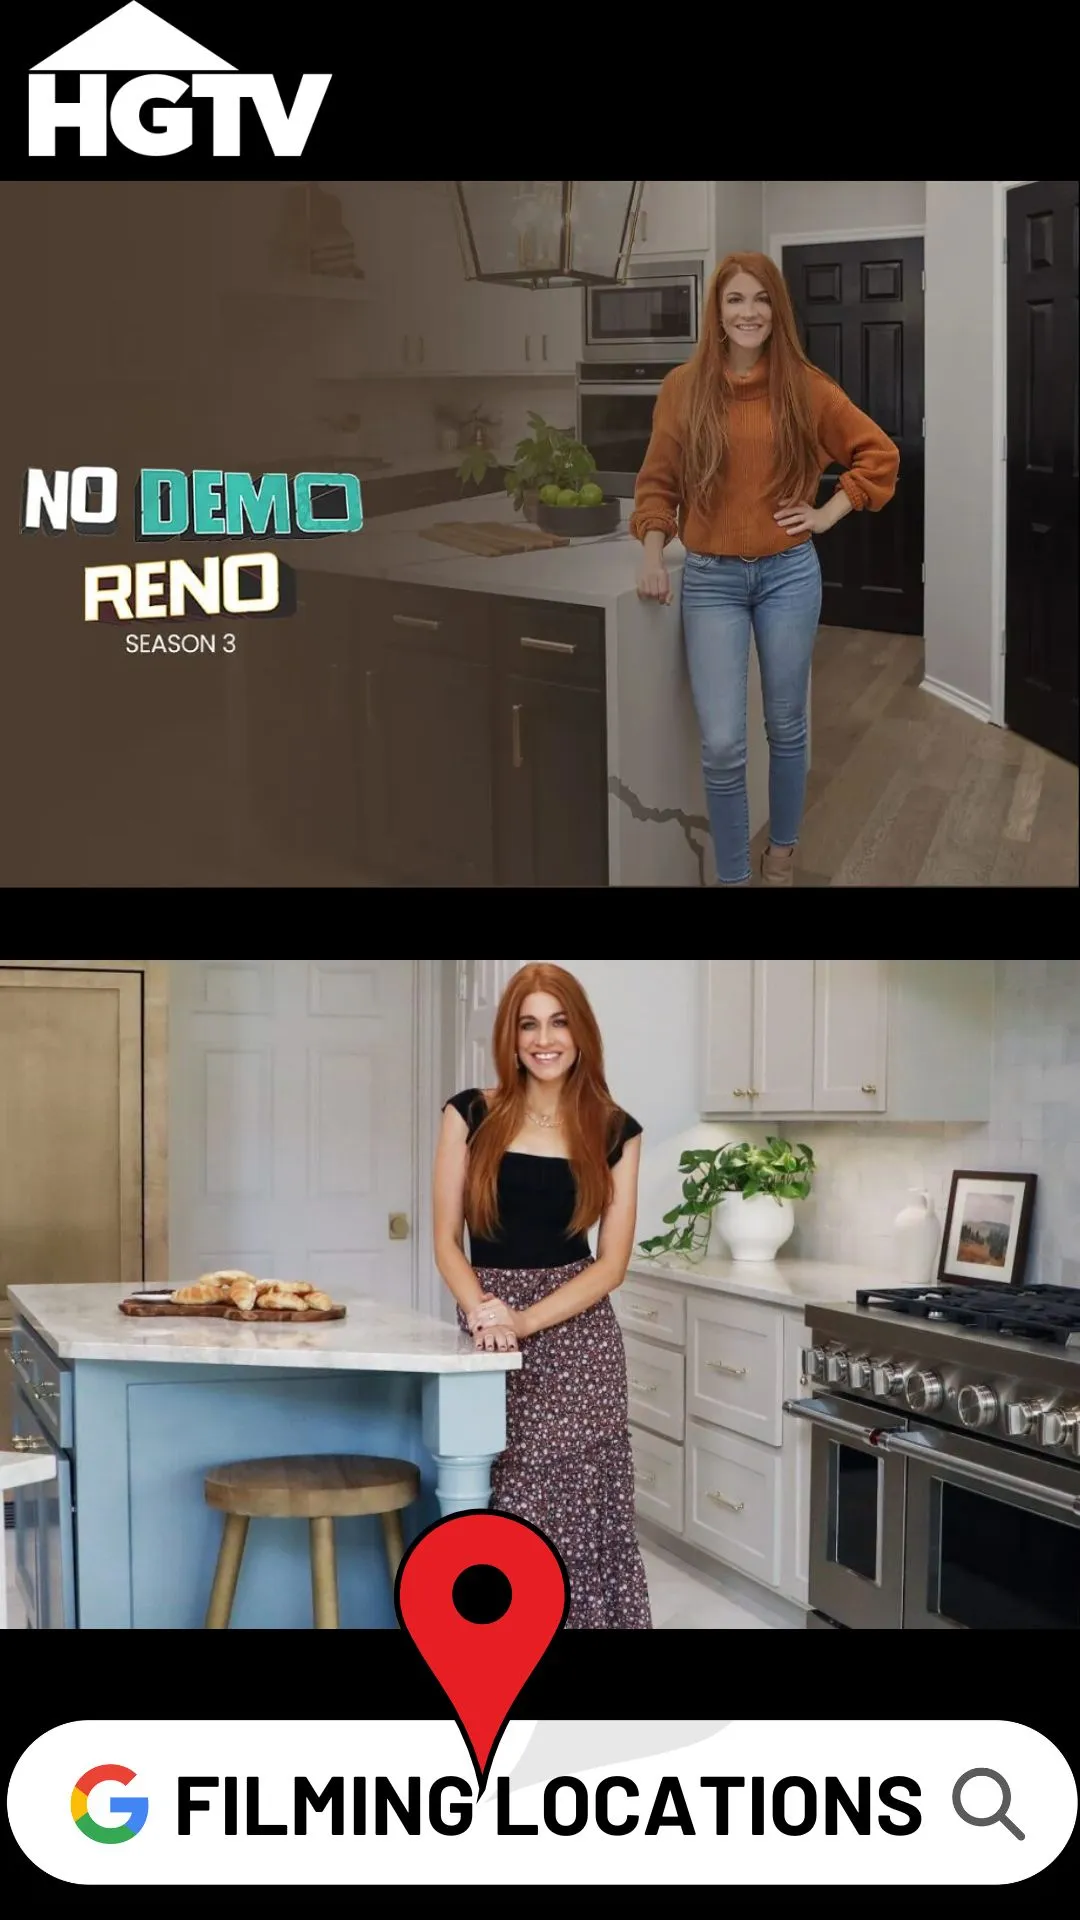 Where Is No Demo Reno Season 3 Filmed